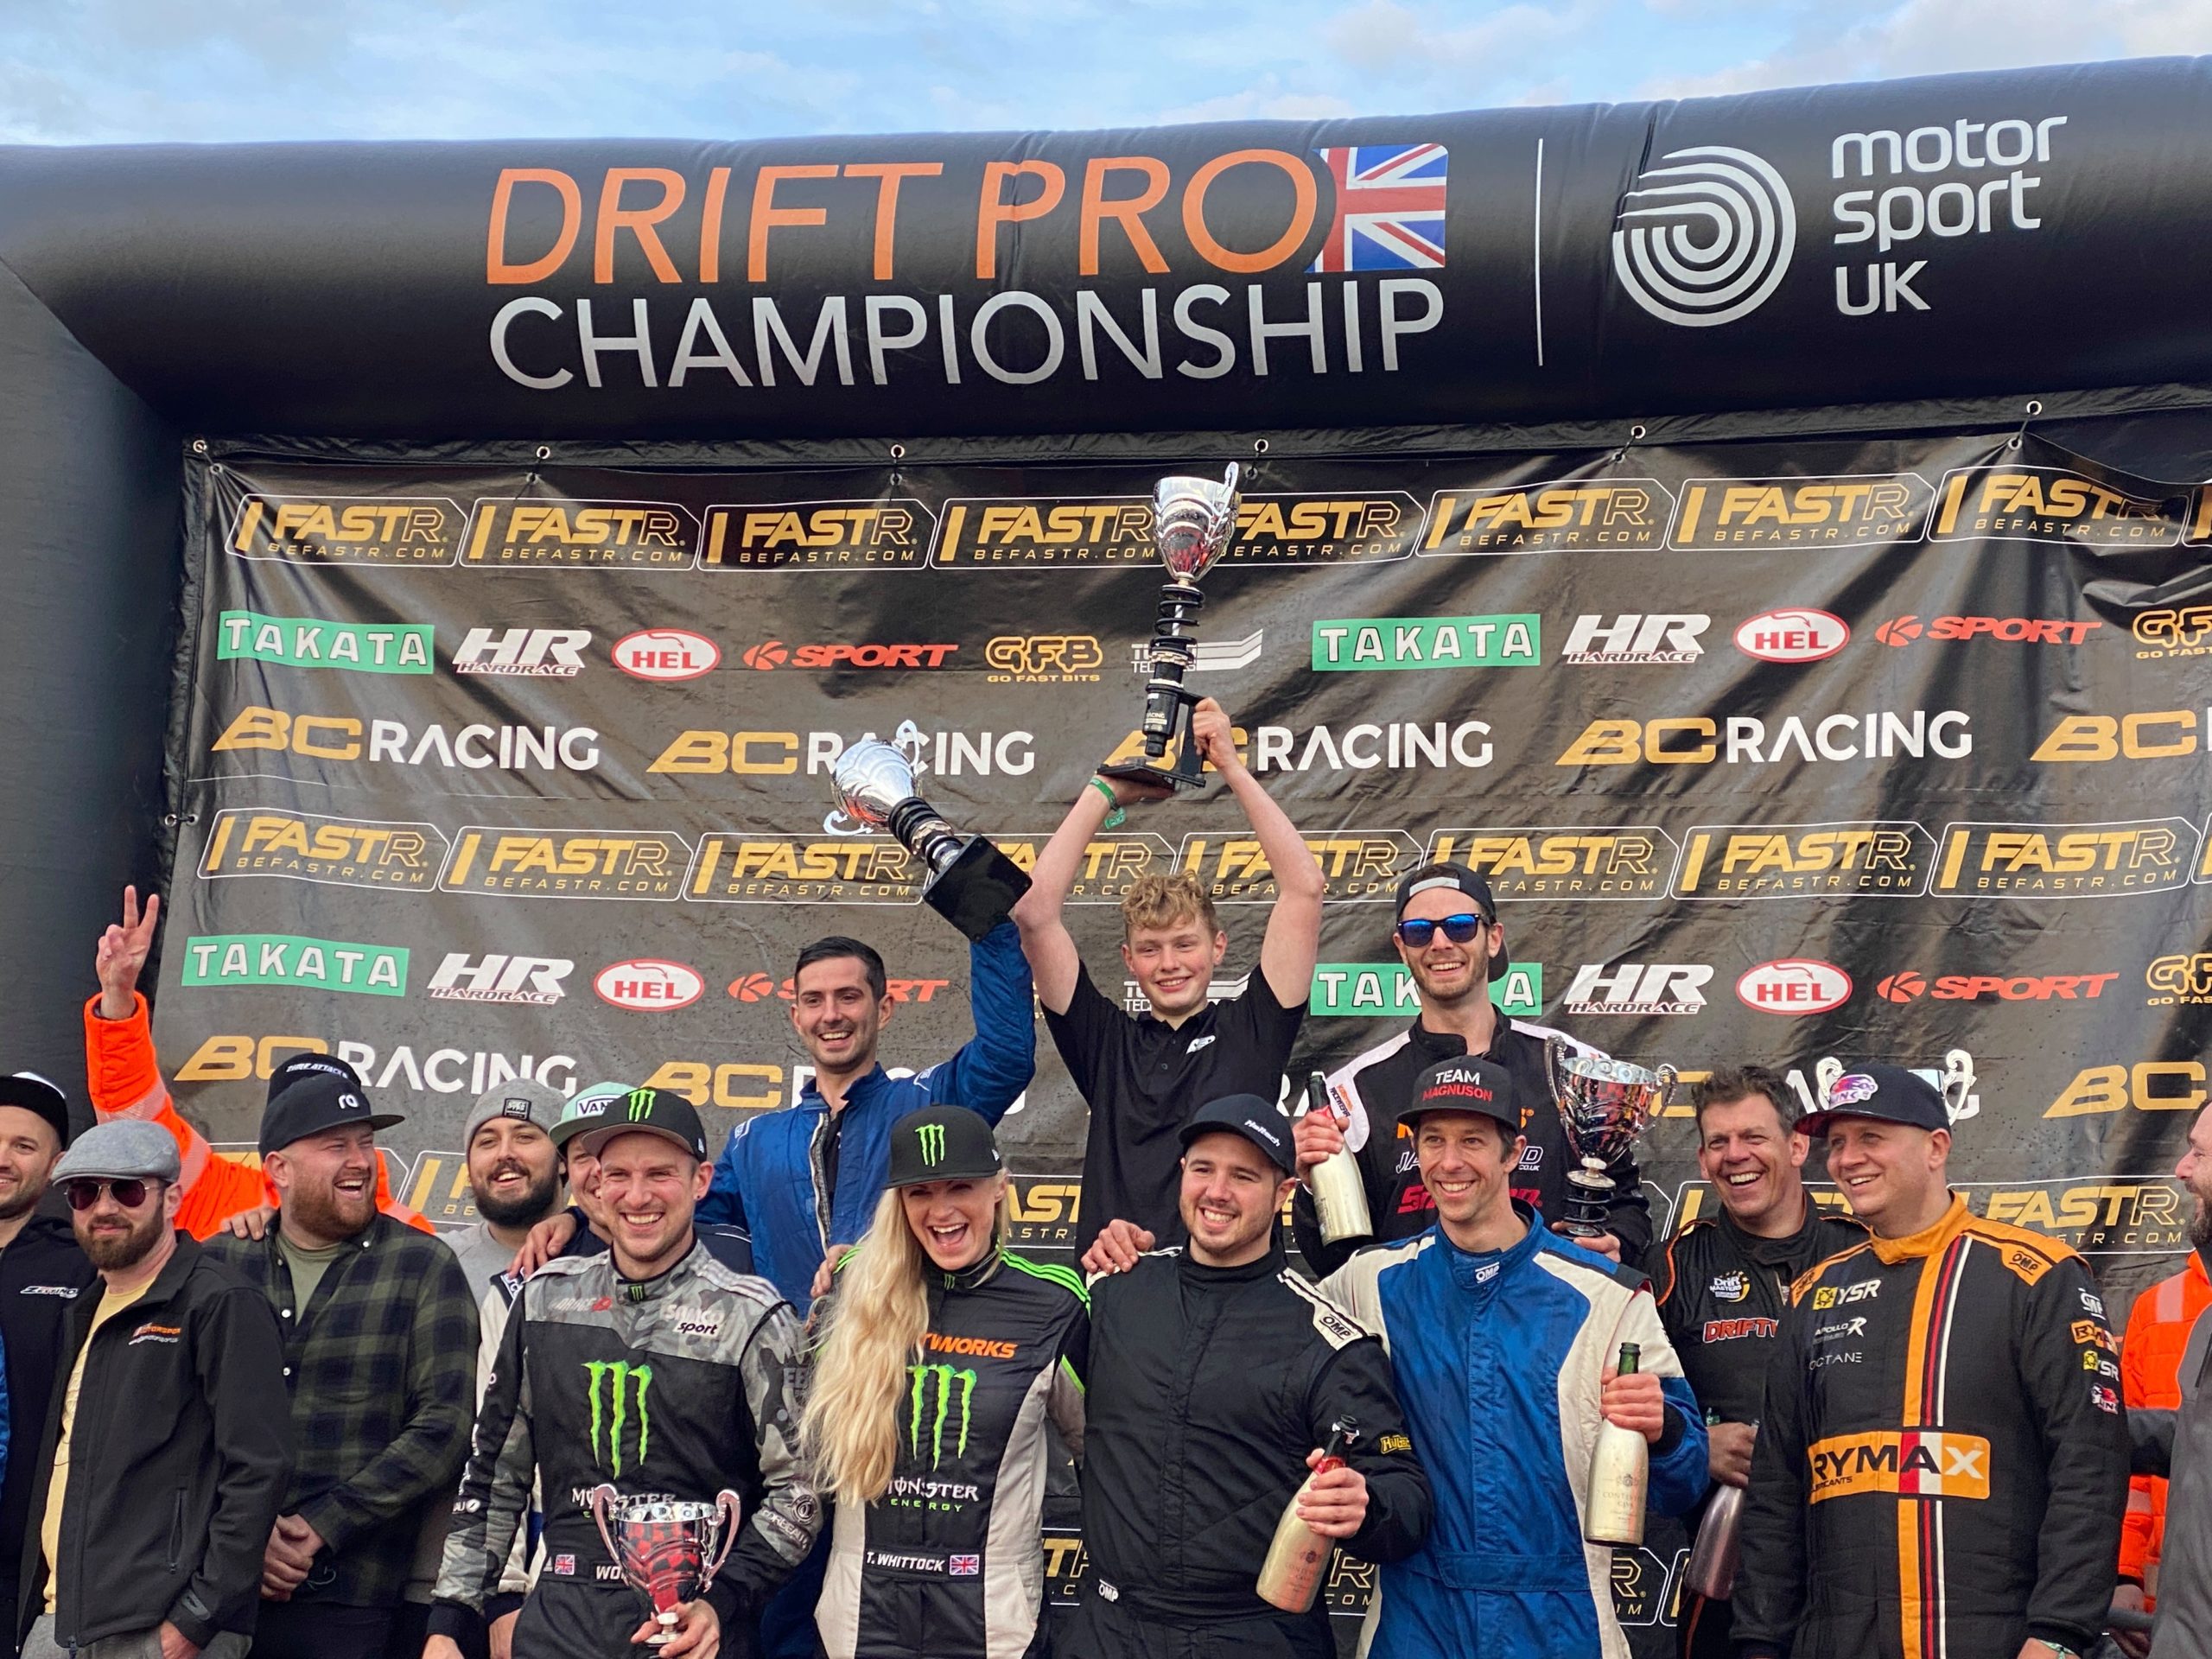 Max Cotton Wins 2021 MSUK Drift Pro Championship